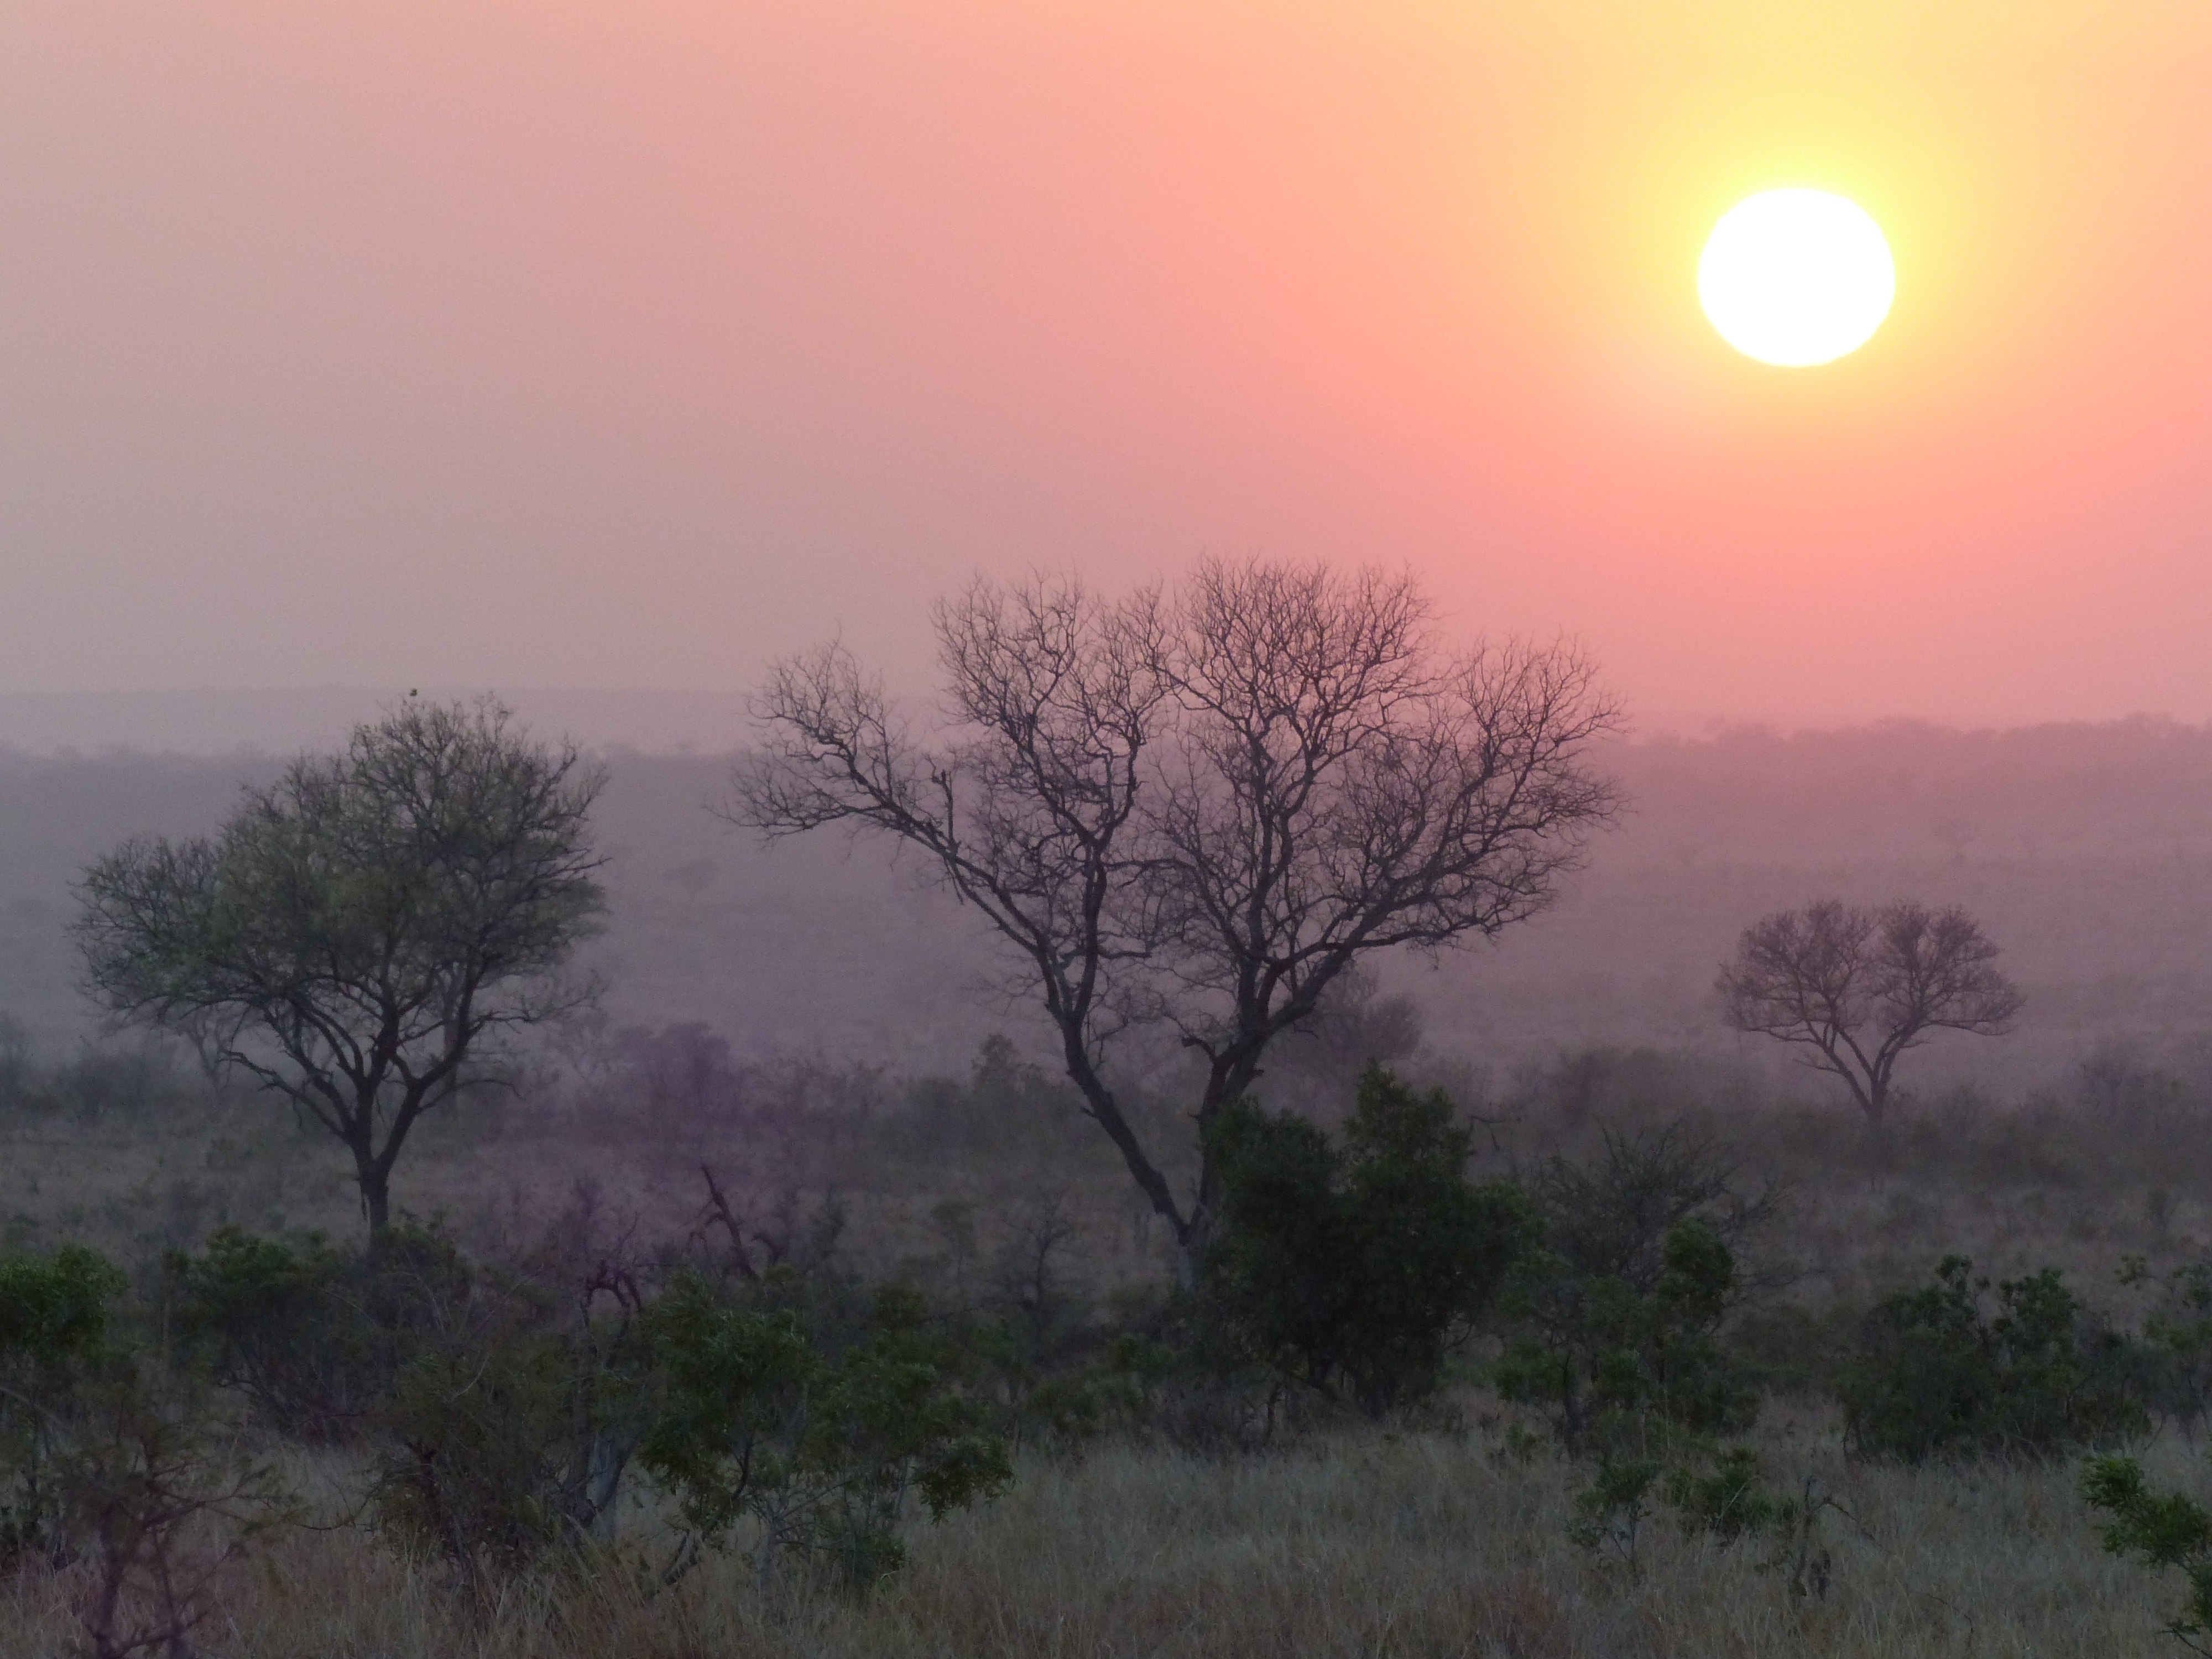 Sunrise in South Africa